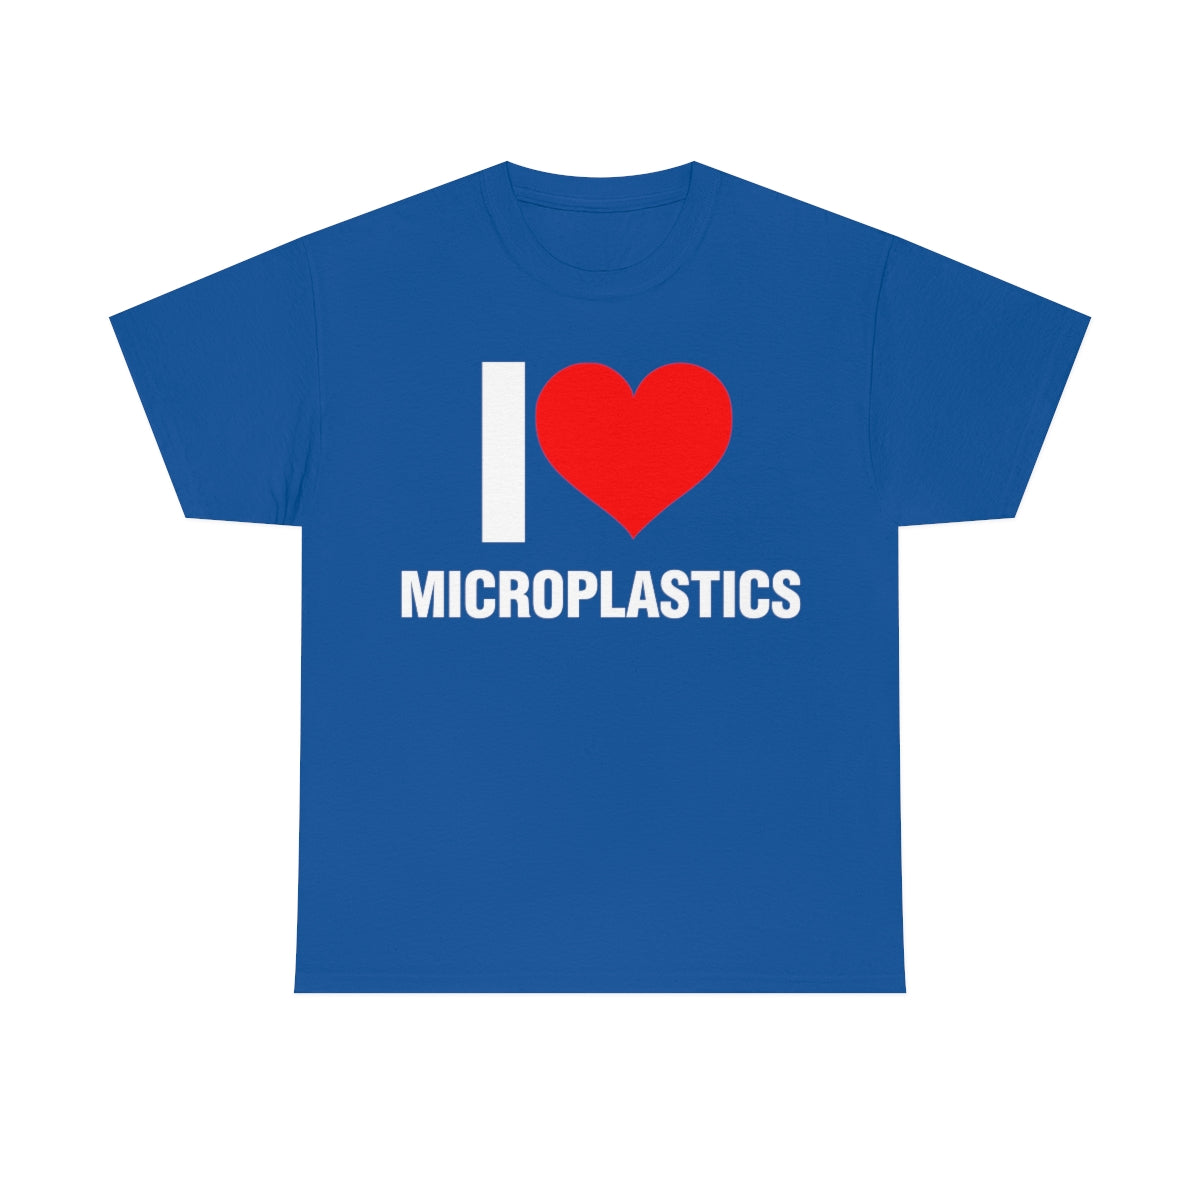 I LOVE MICROPLASTICS TEE